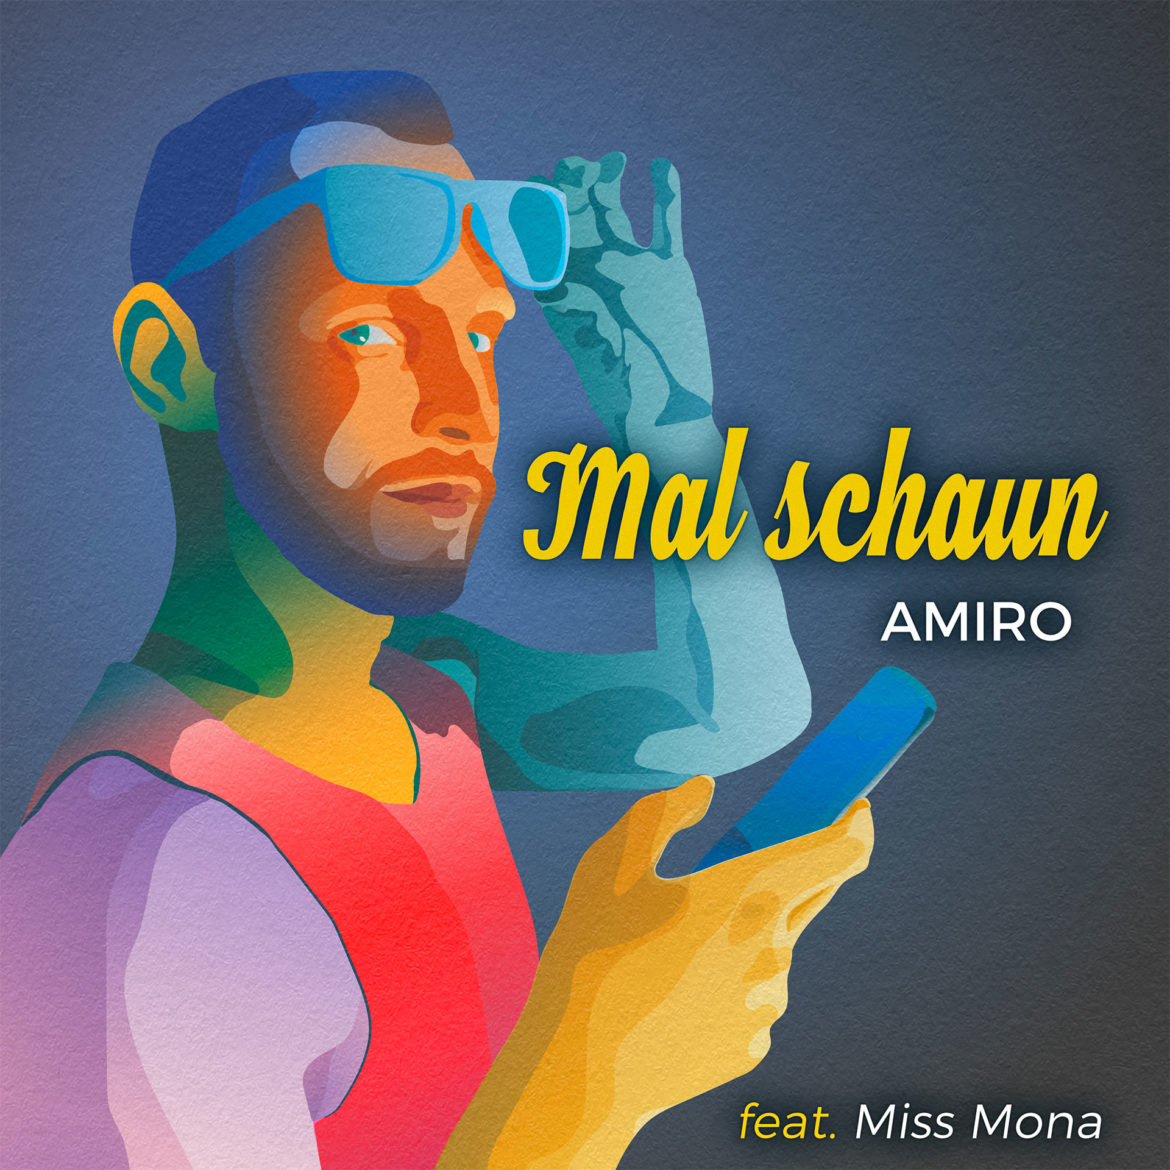 Album Cover: Mal Schaun, Amiro, Adobe Illustrator